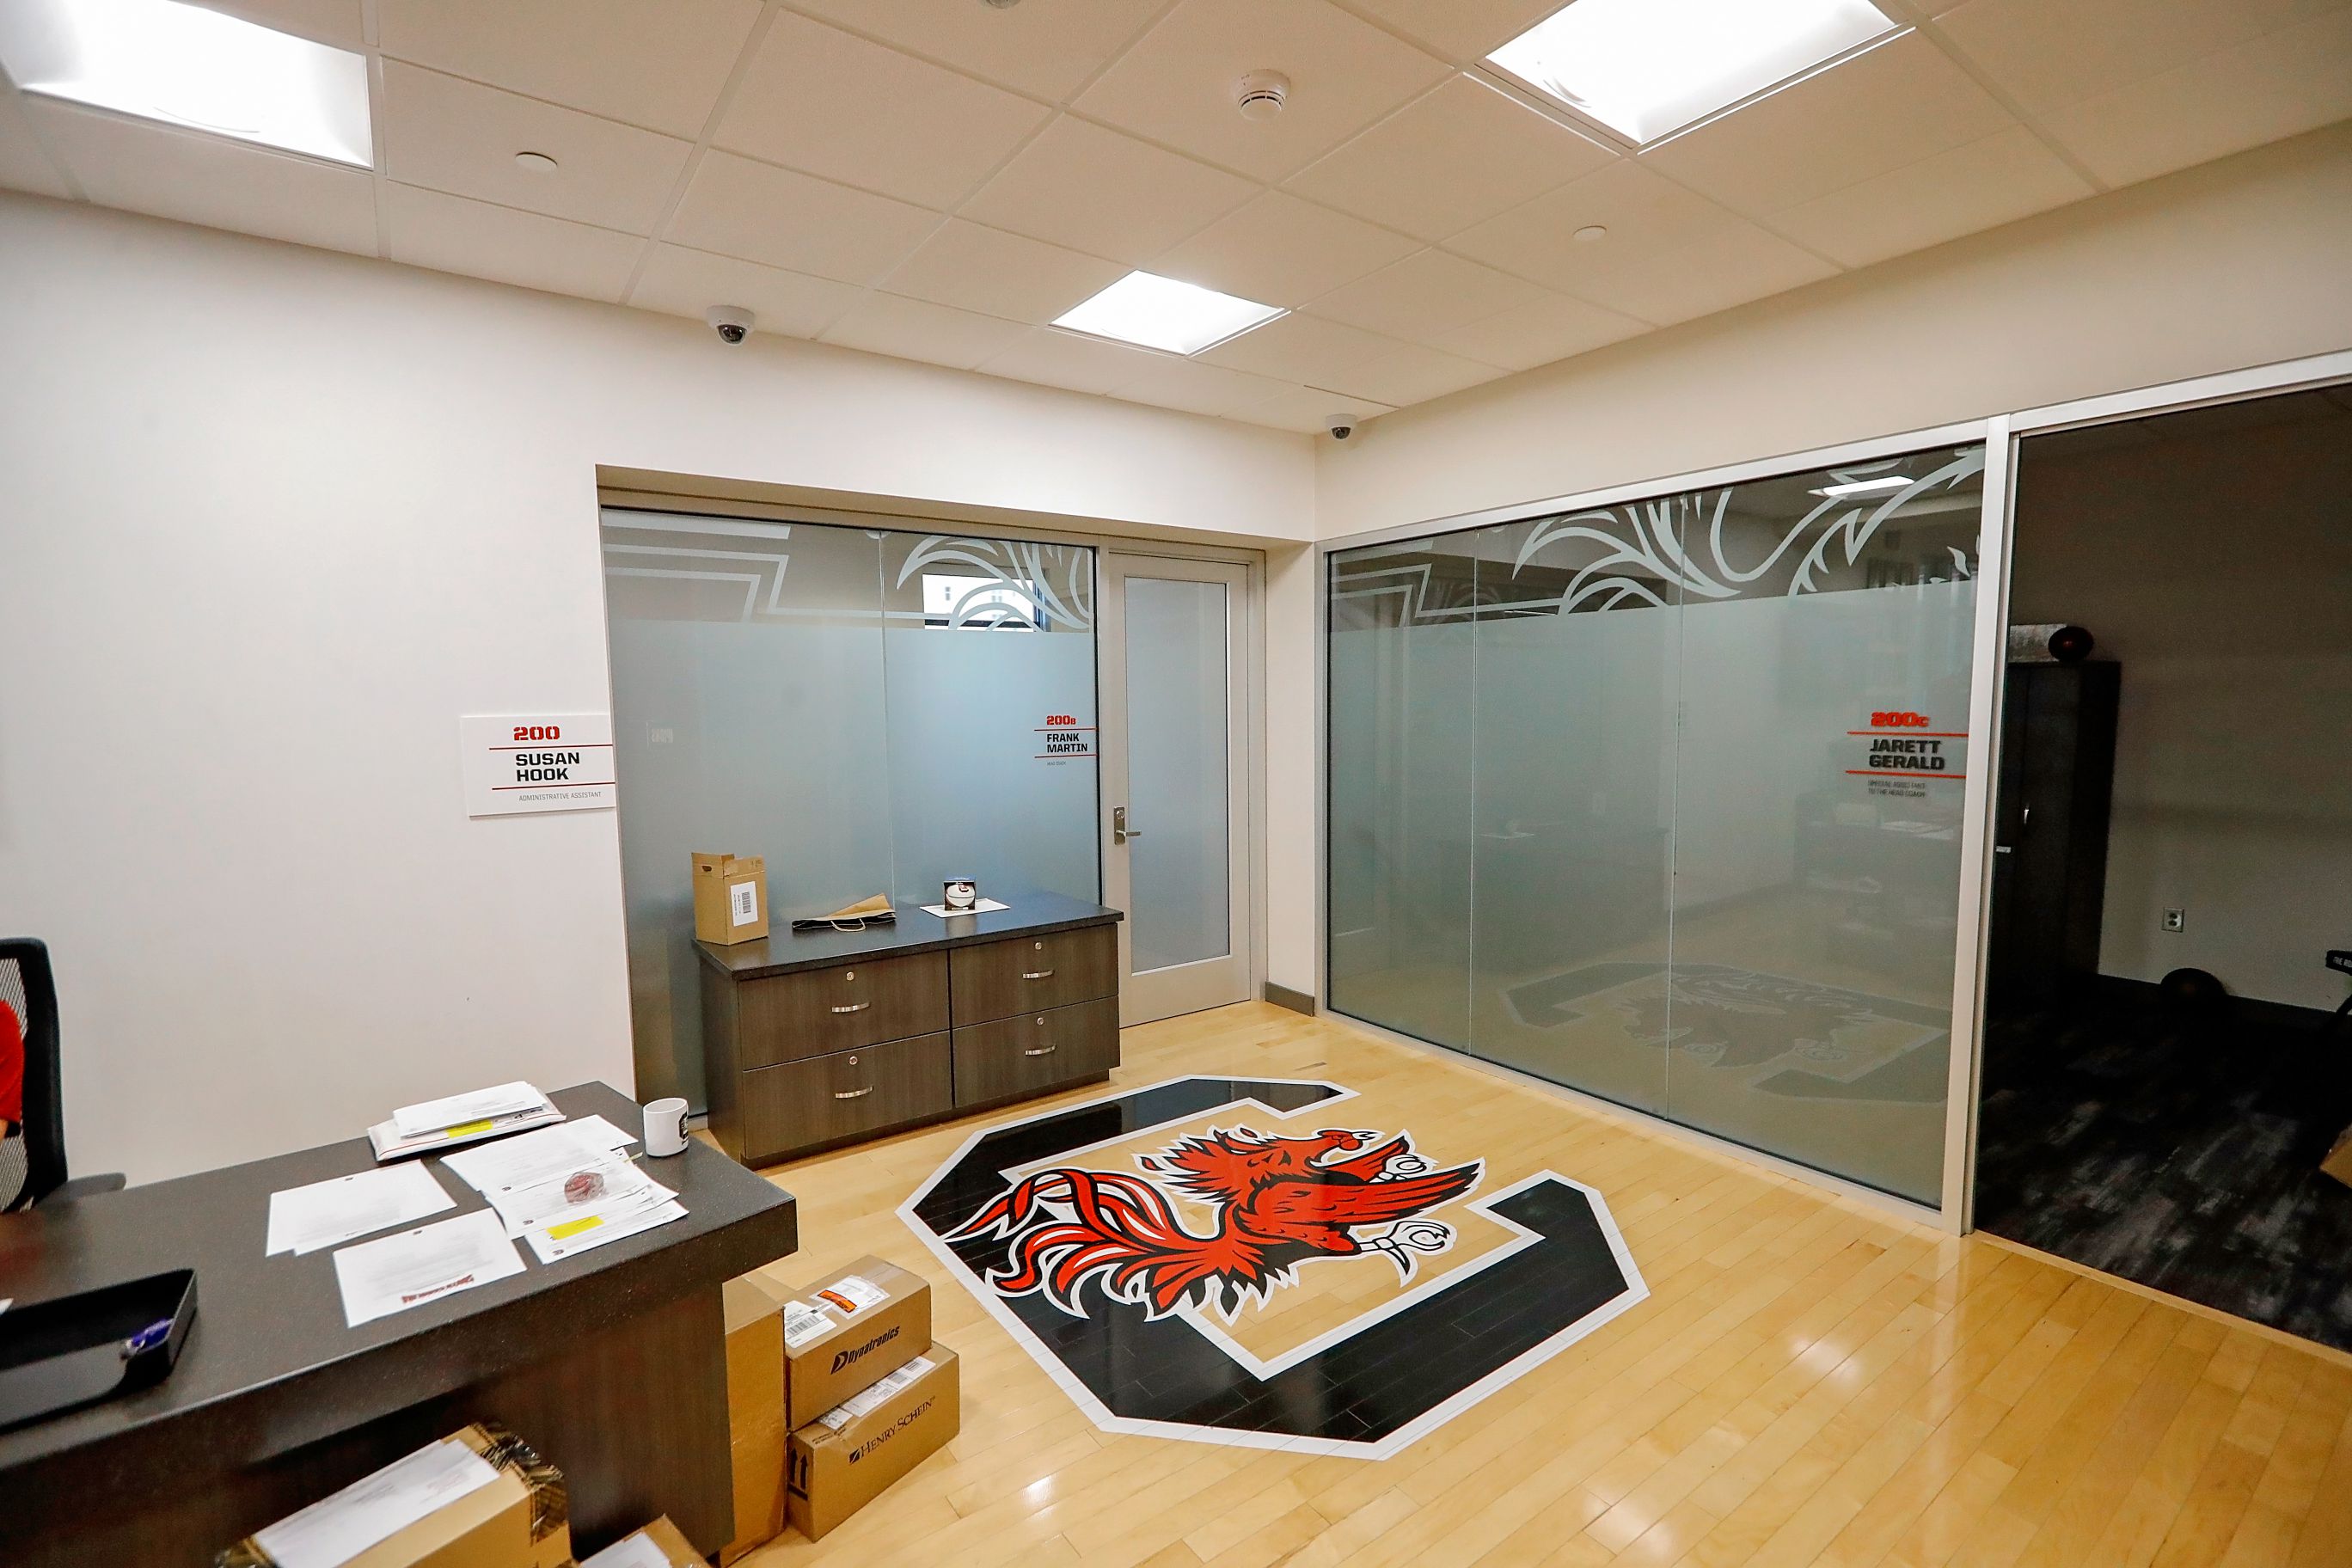 September 6, 2019: USC Basketball Offices and Locker Rooms - Columbia, SC (Gillam &amp; Associates, Inc.)